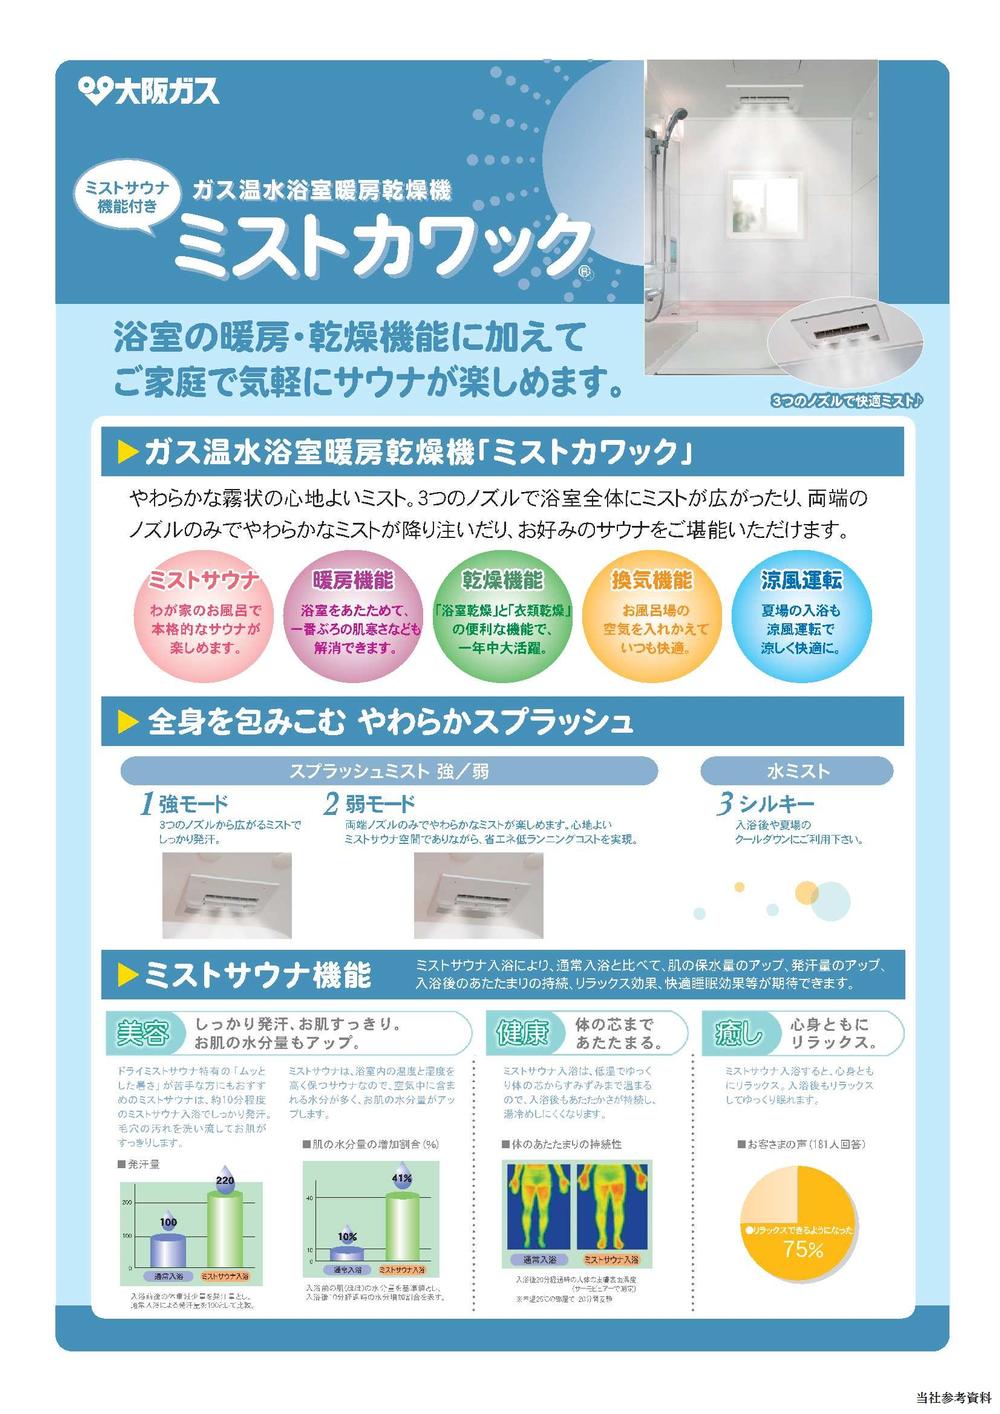 Power generation ・ Hot water equipment. Kawakku of big success in dry difficult season of laundry